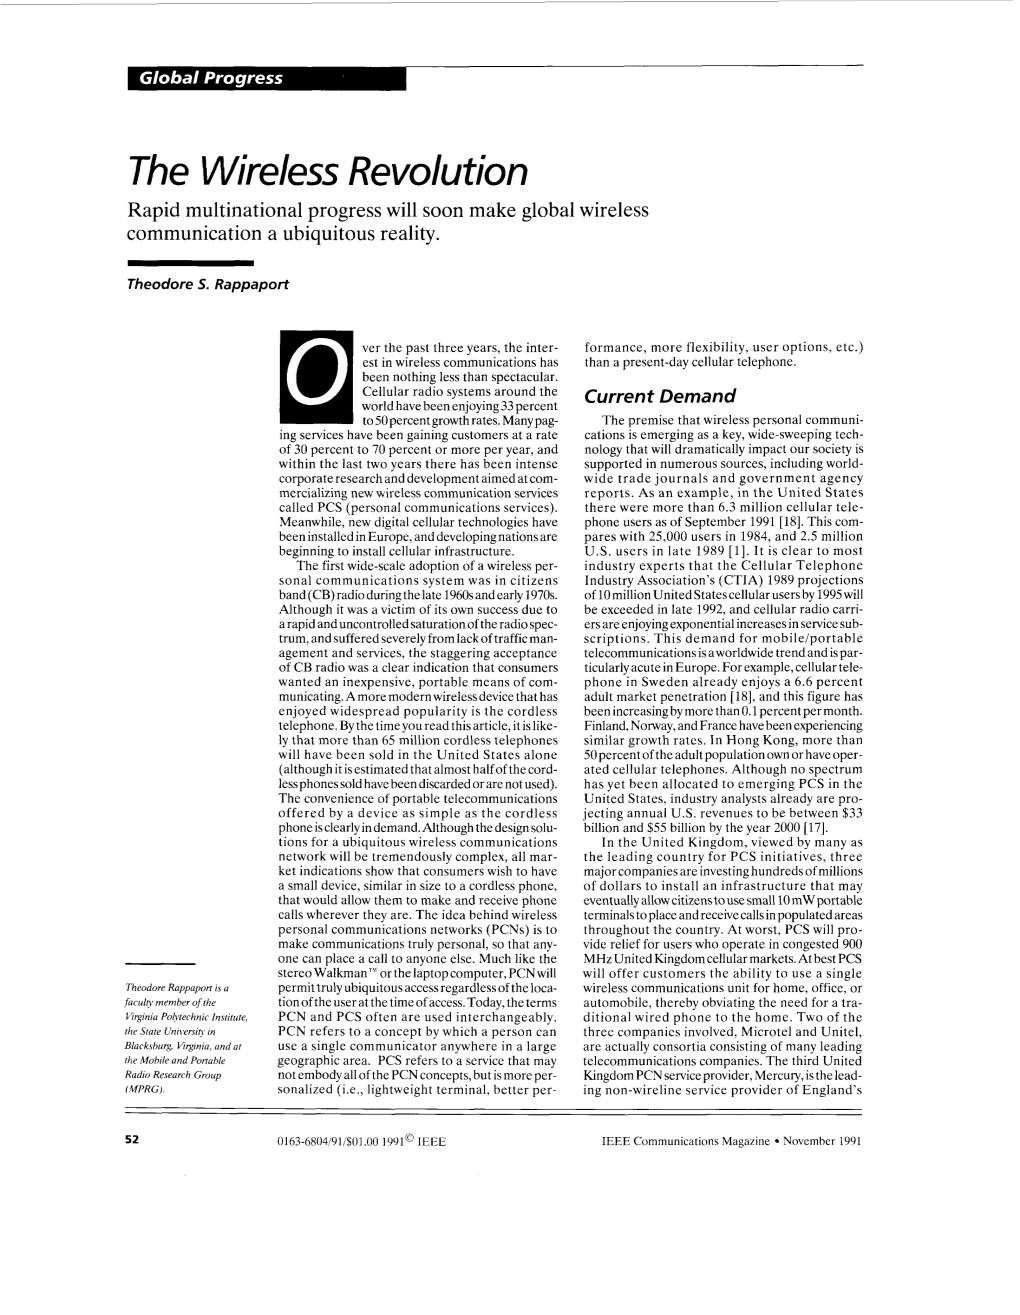 The Wireless Revolution Rapid Multinational Progress Will Soon Make Global Wireless Communication a Ubiquitous Reality